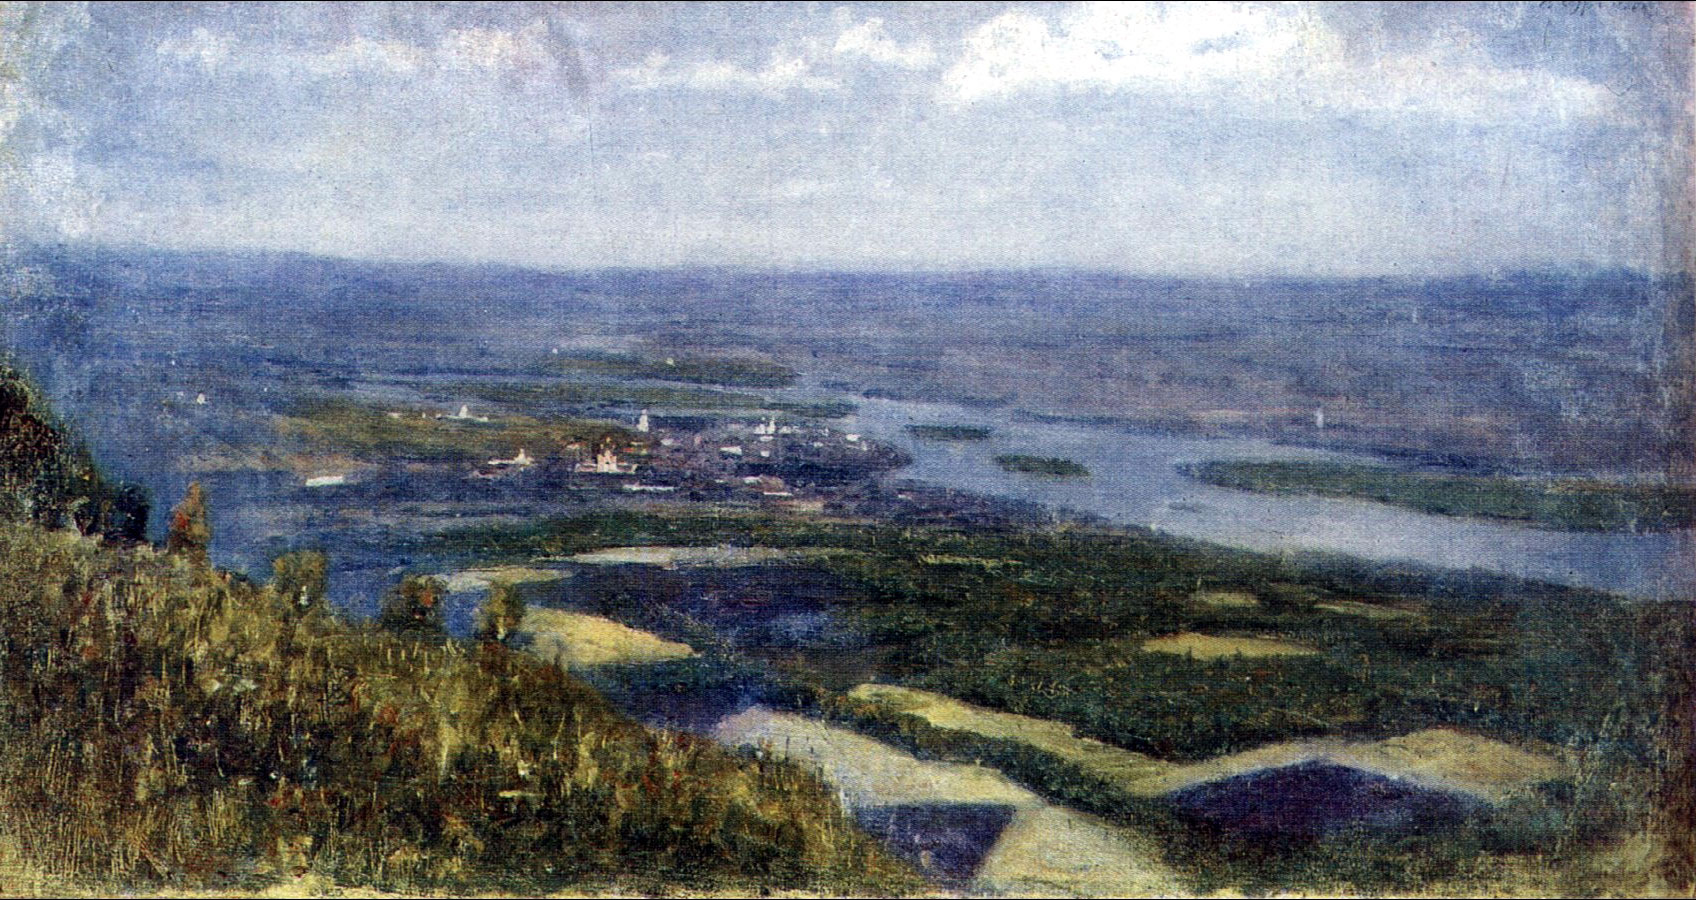 View of Krasnoyarsk from knoll (1892).